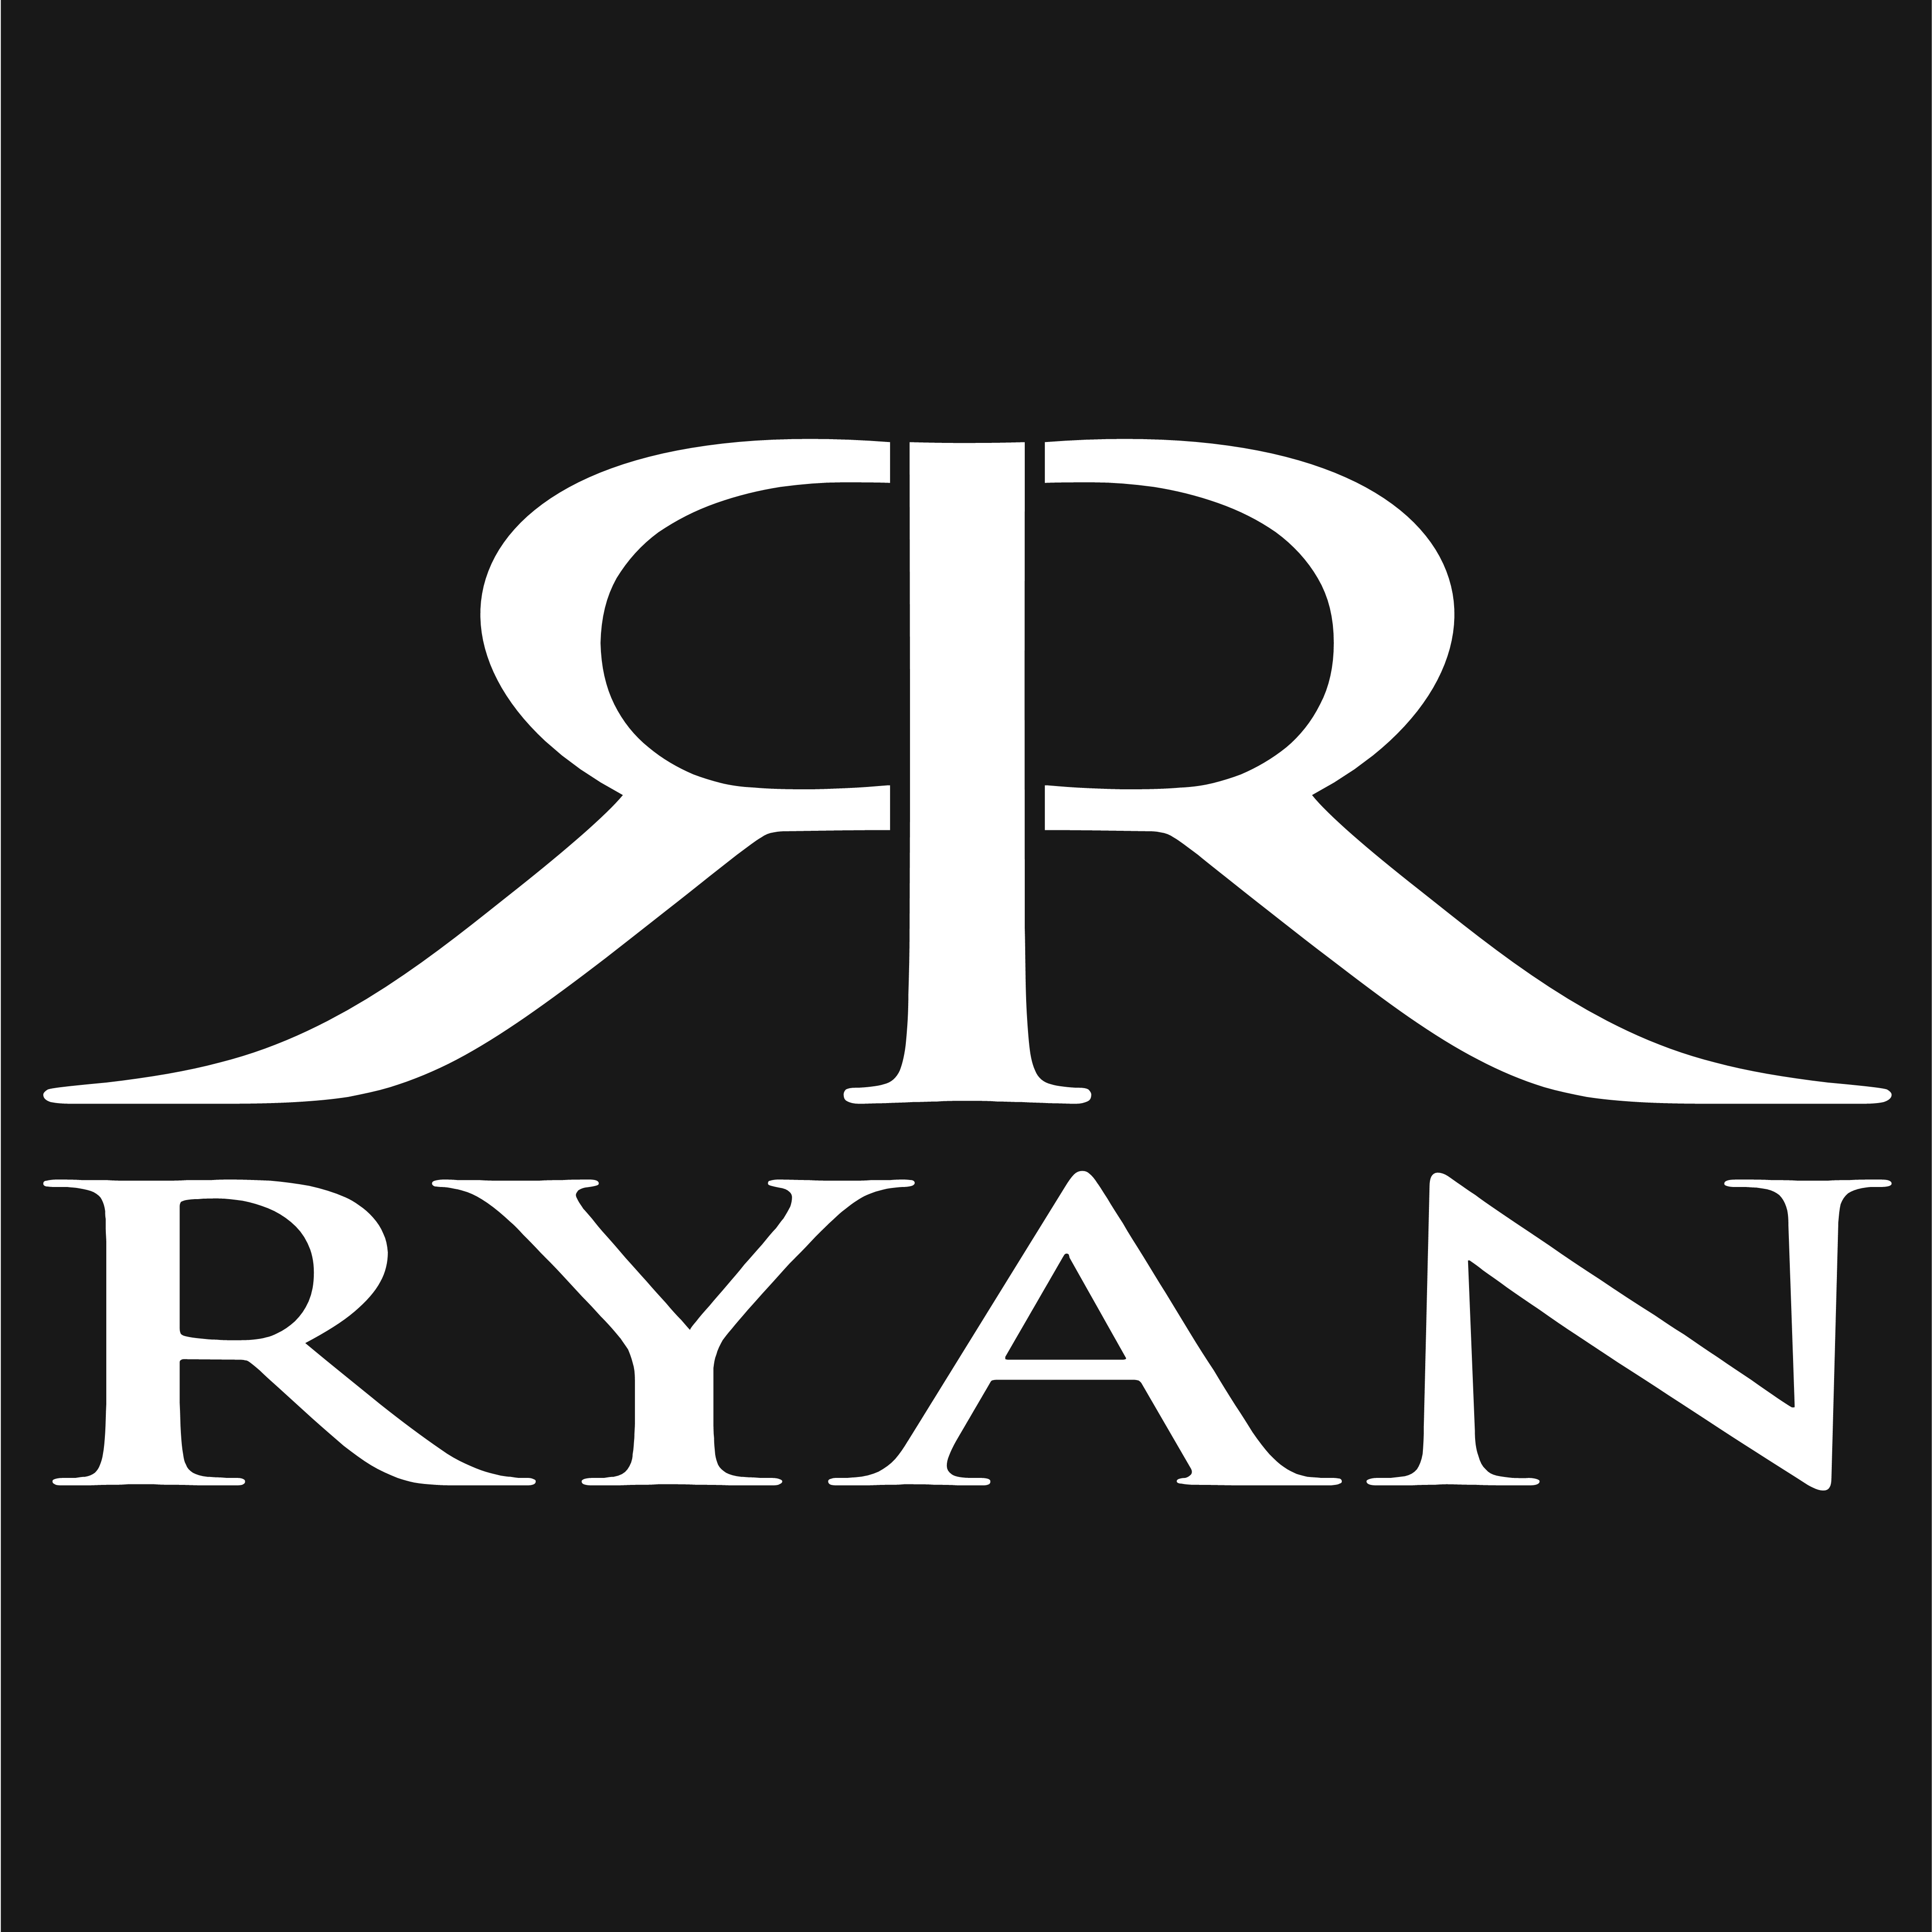 www.ryanspeakers.com